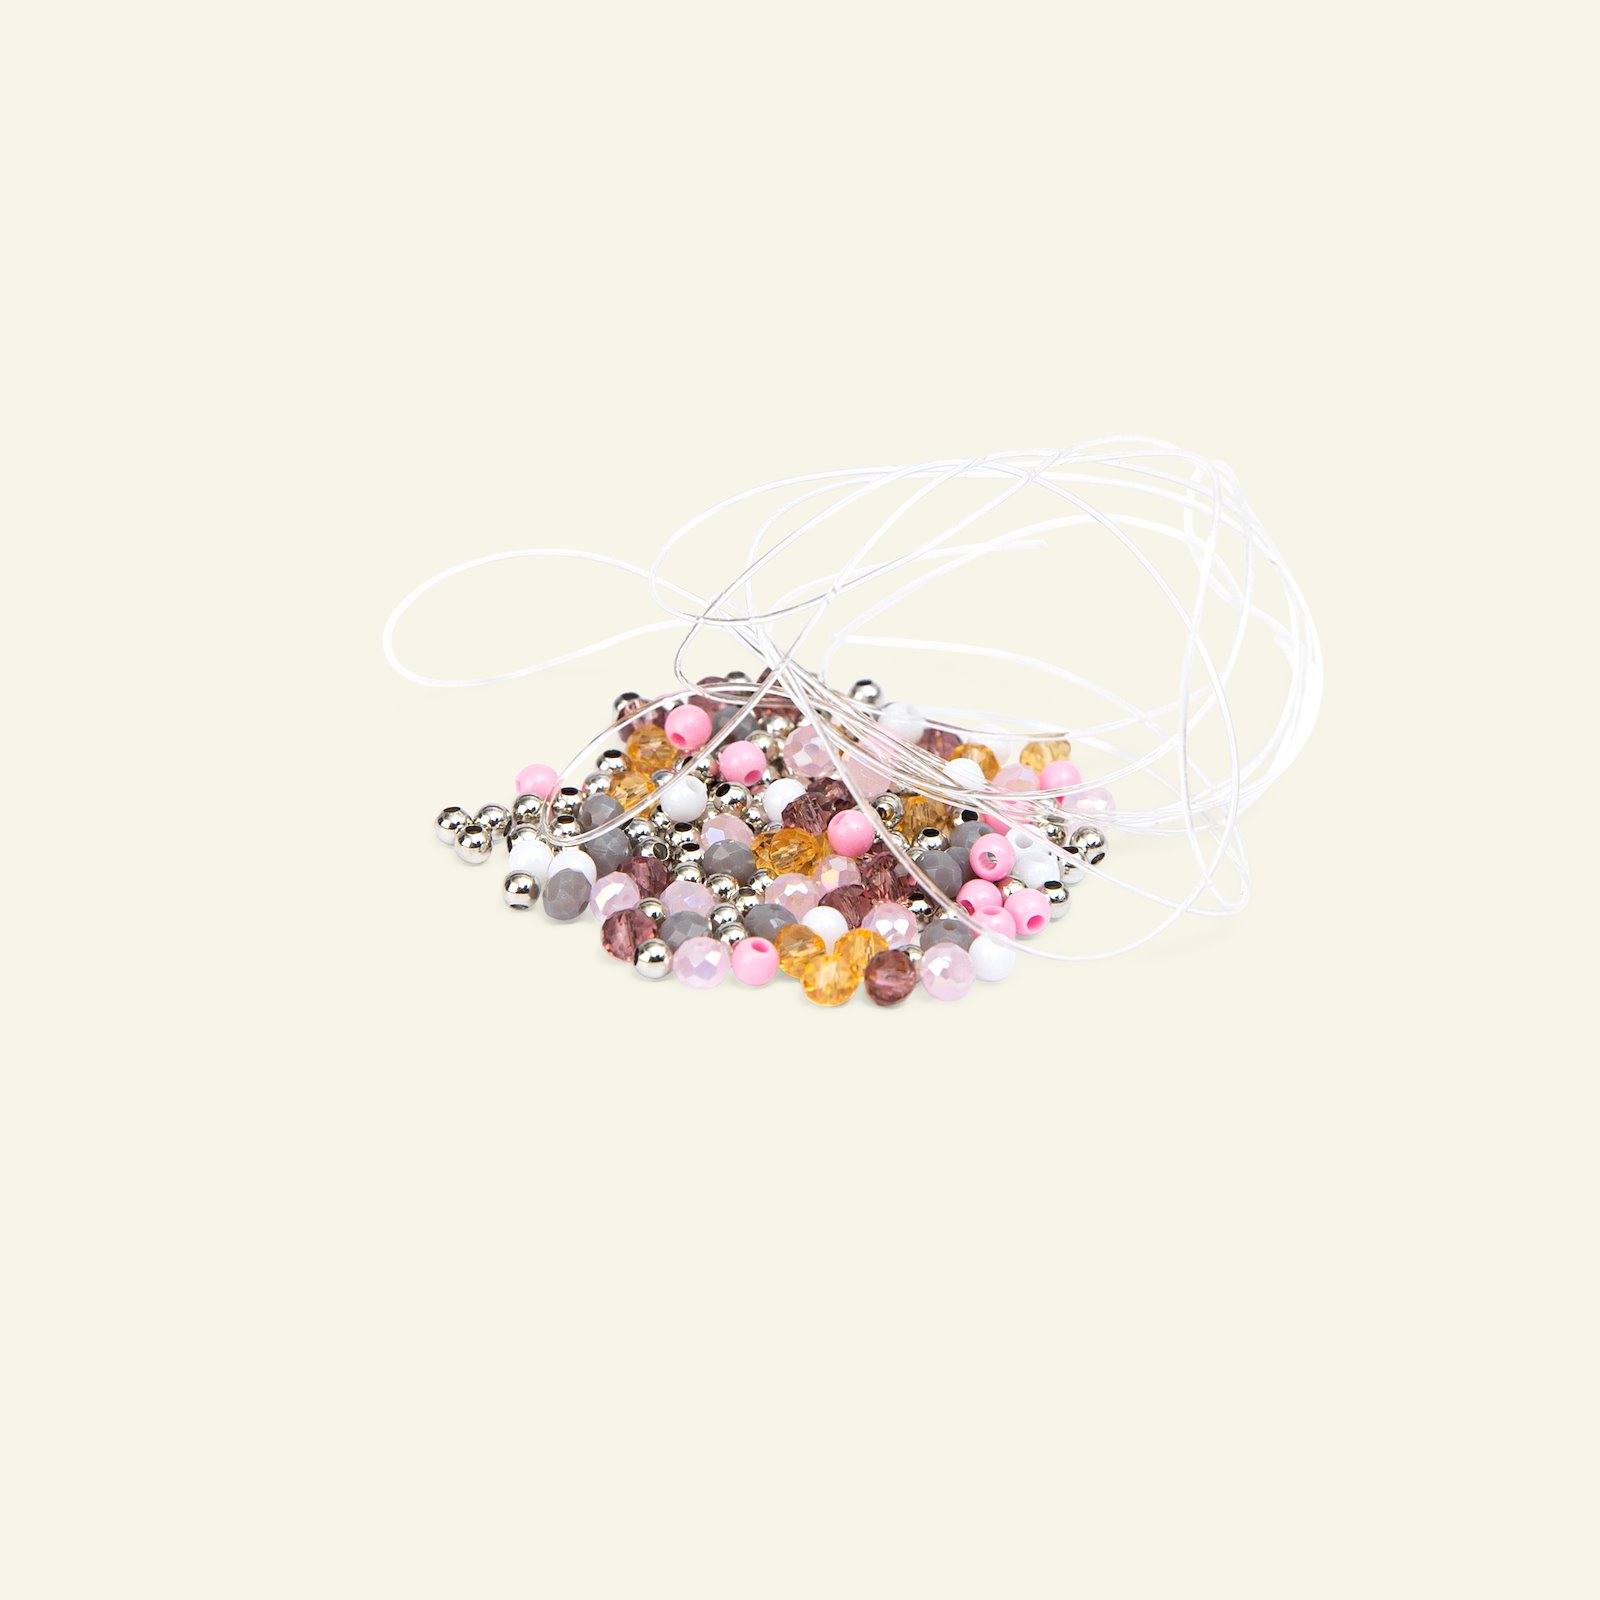 Kit bracelet beads rose/silver mix 1pc 26906_pack_b